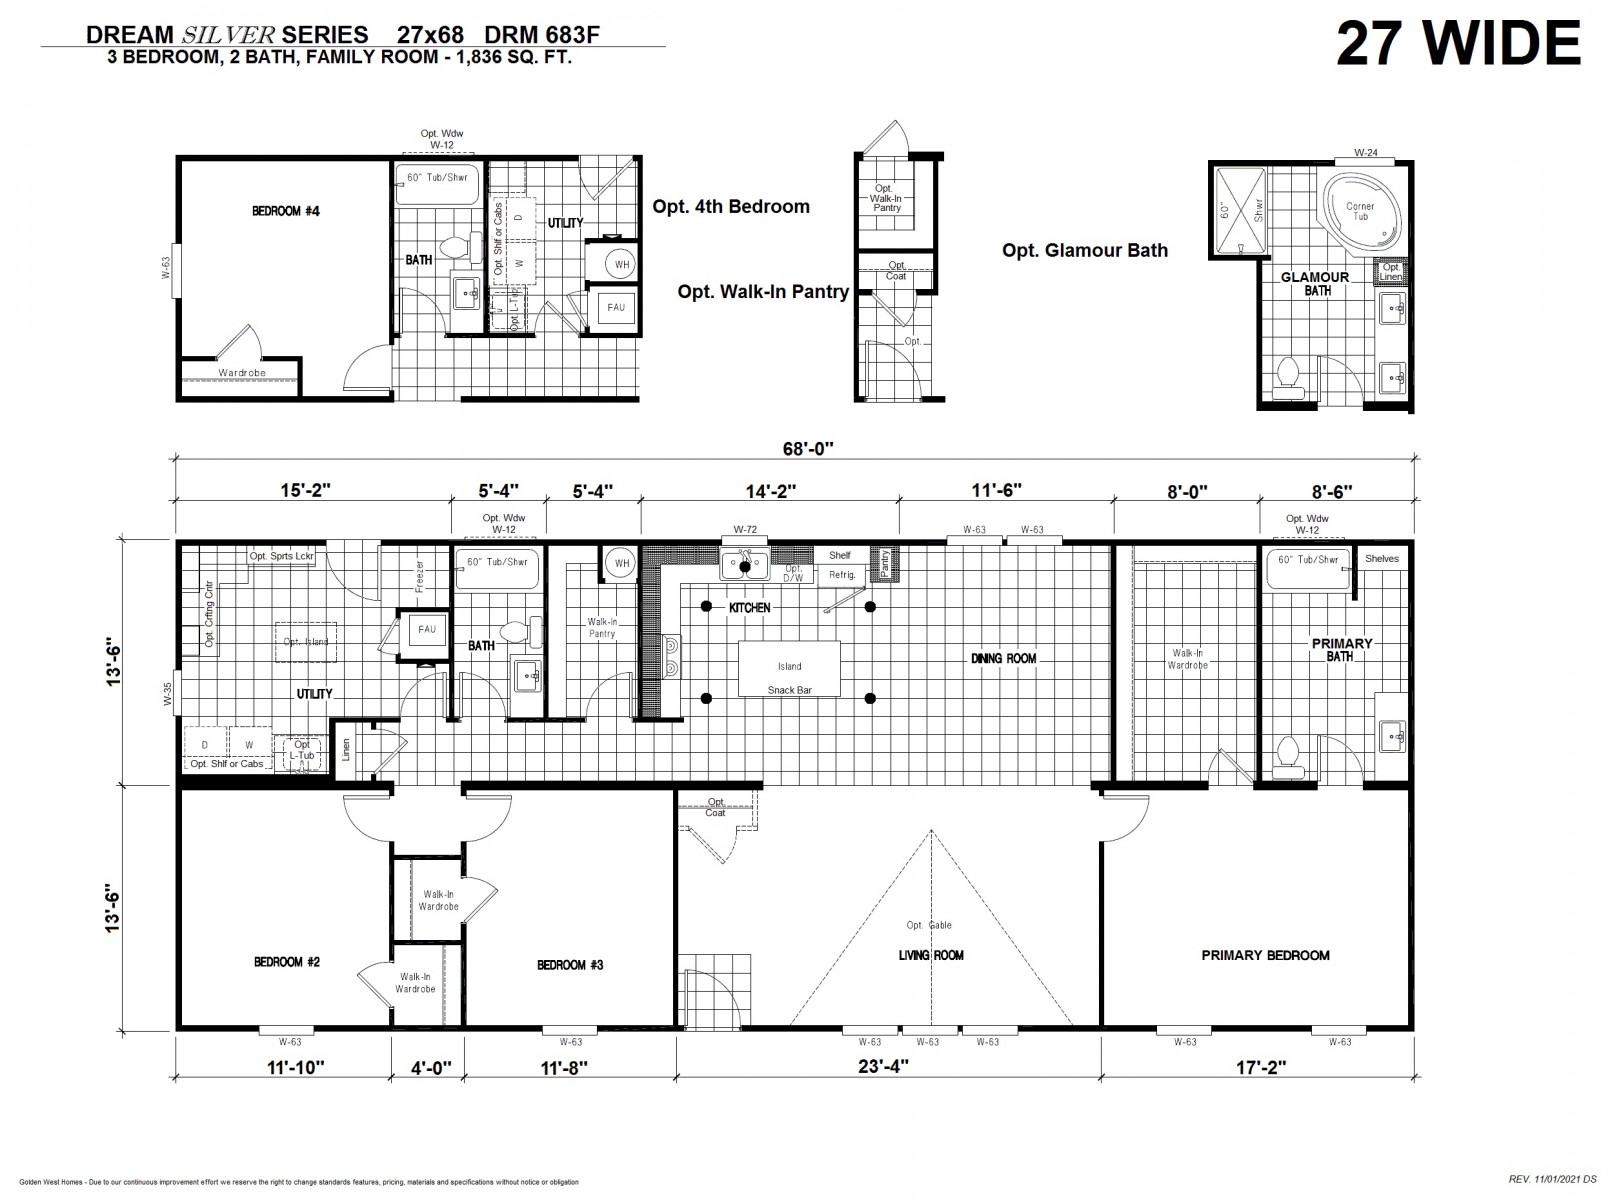 Homes Direct Modular Homes - Model DRM683F - Floorplan